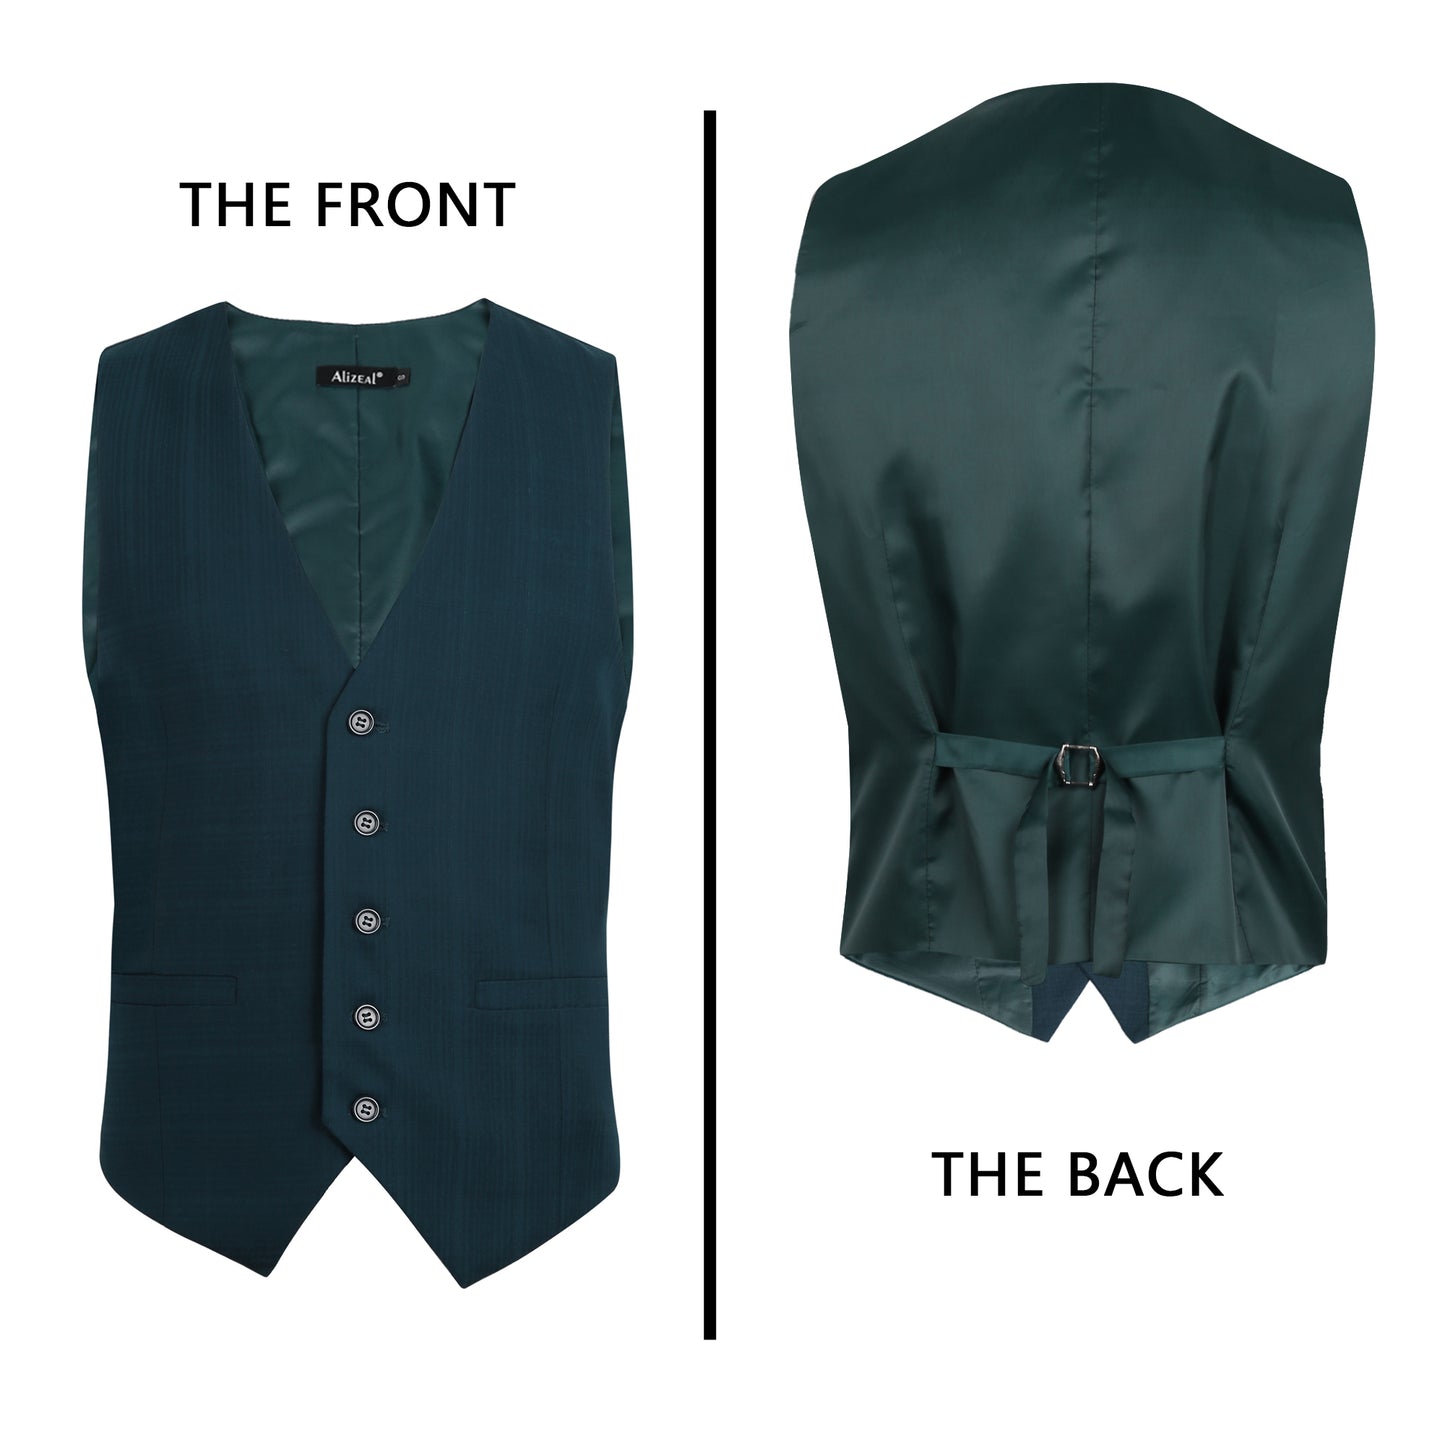 Men's Plaid Business Suit Vest Formal Dress Slim Fit Waistcoat, 194-Dark Green